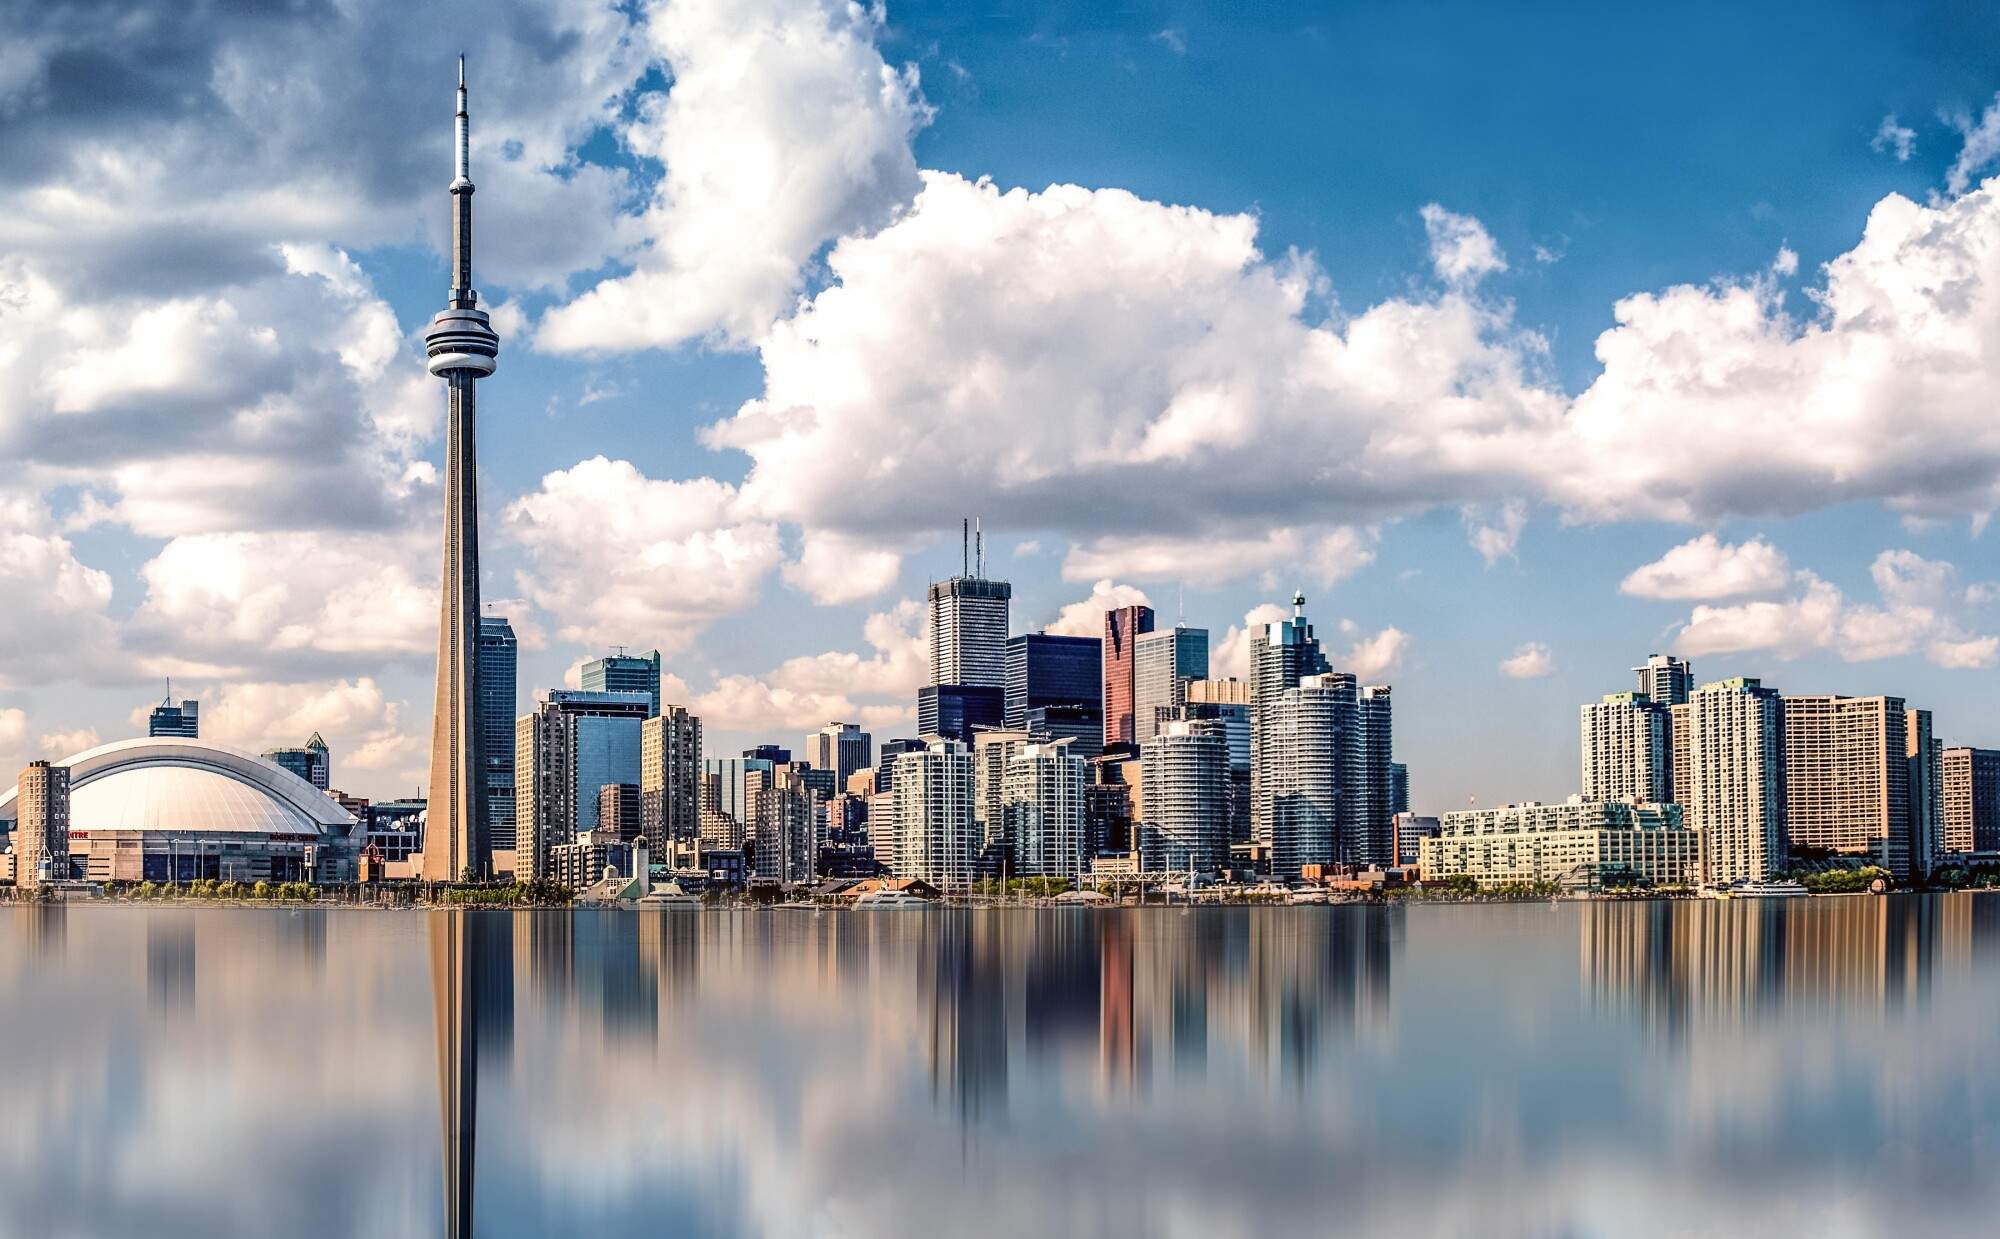 Why Should You Take a Trip to Toronto?